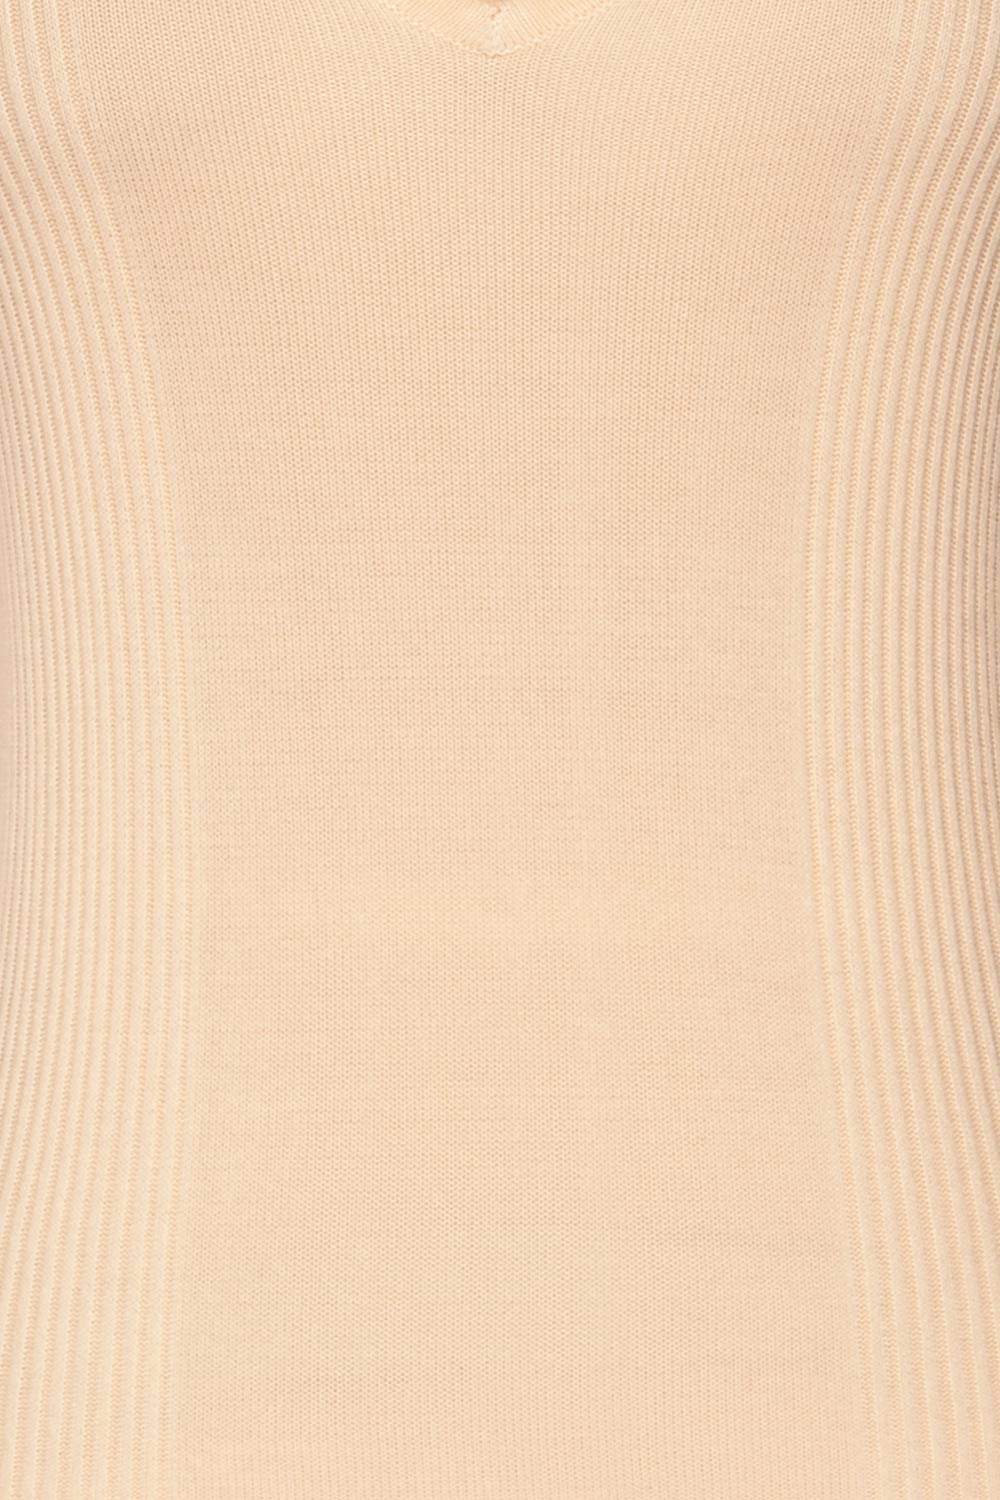 Kolno Cream Ribbed Top w/ Half-Sleeves fabric | La petite garçonne